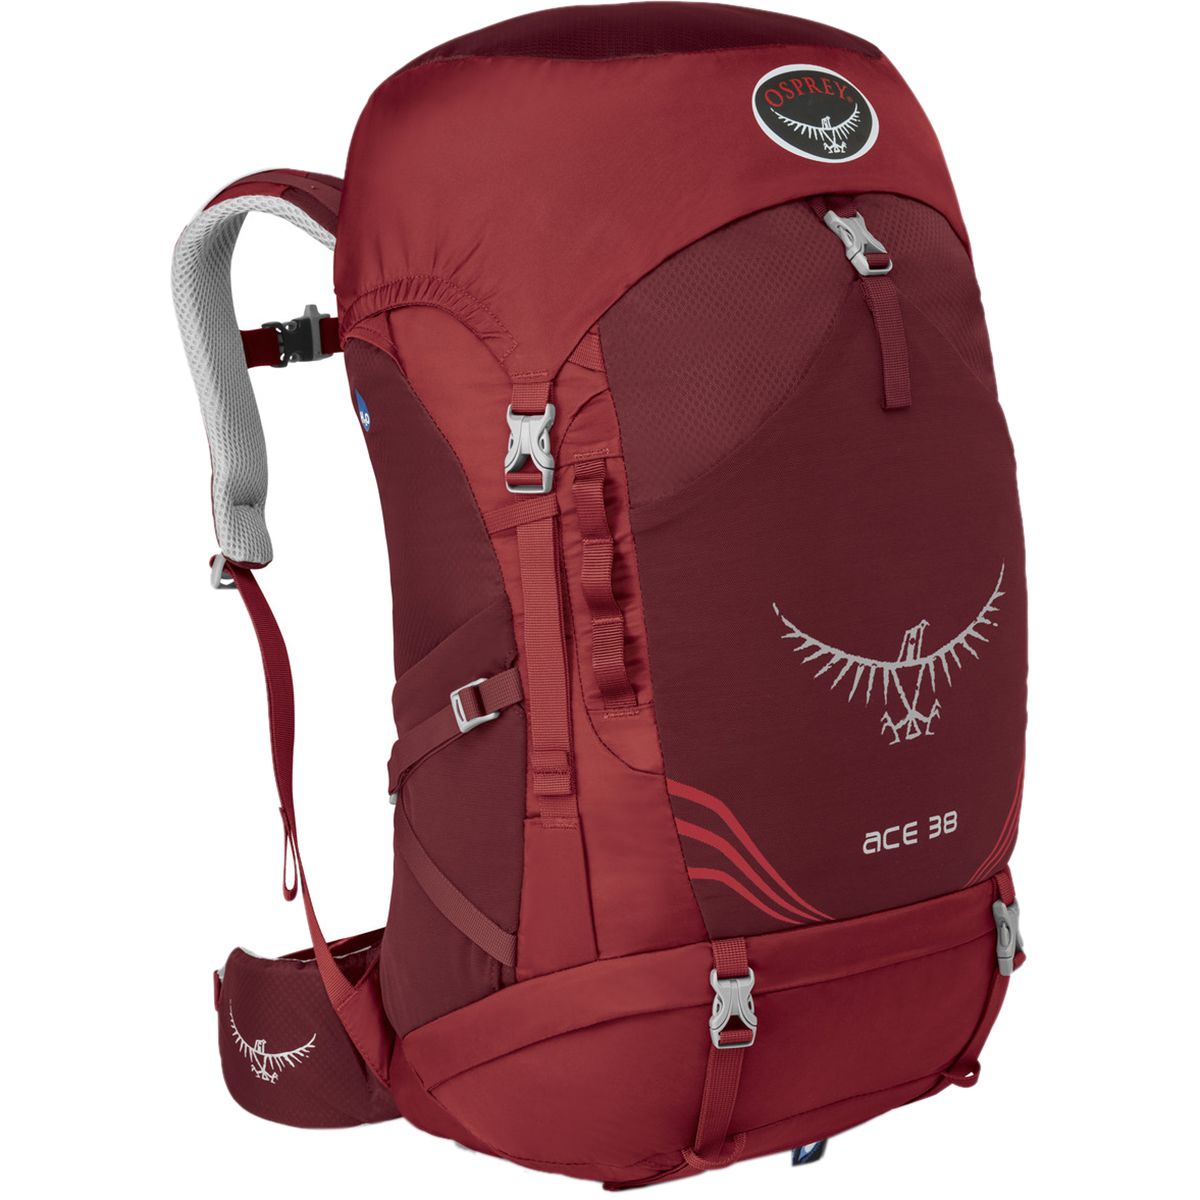 Osprey Packs Ace 38 Backpack - Kids' - 2319cu in